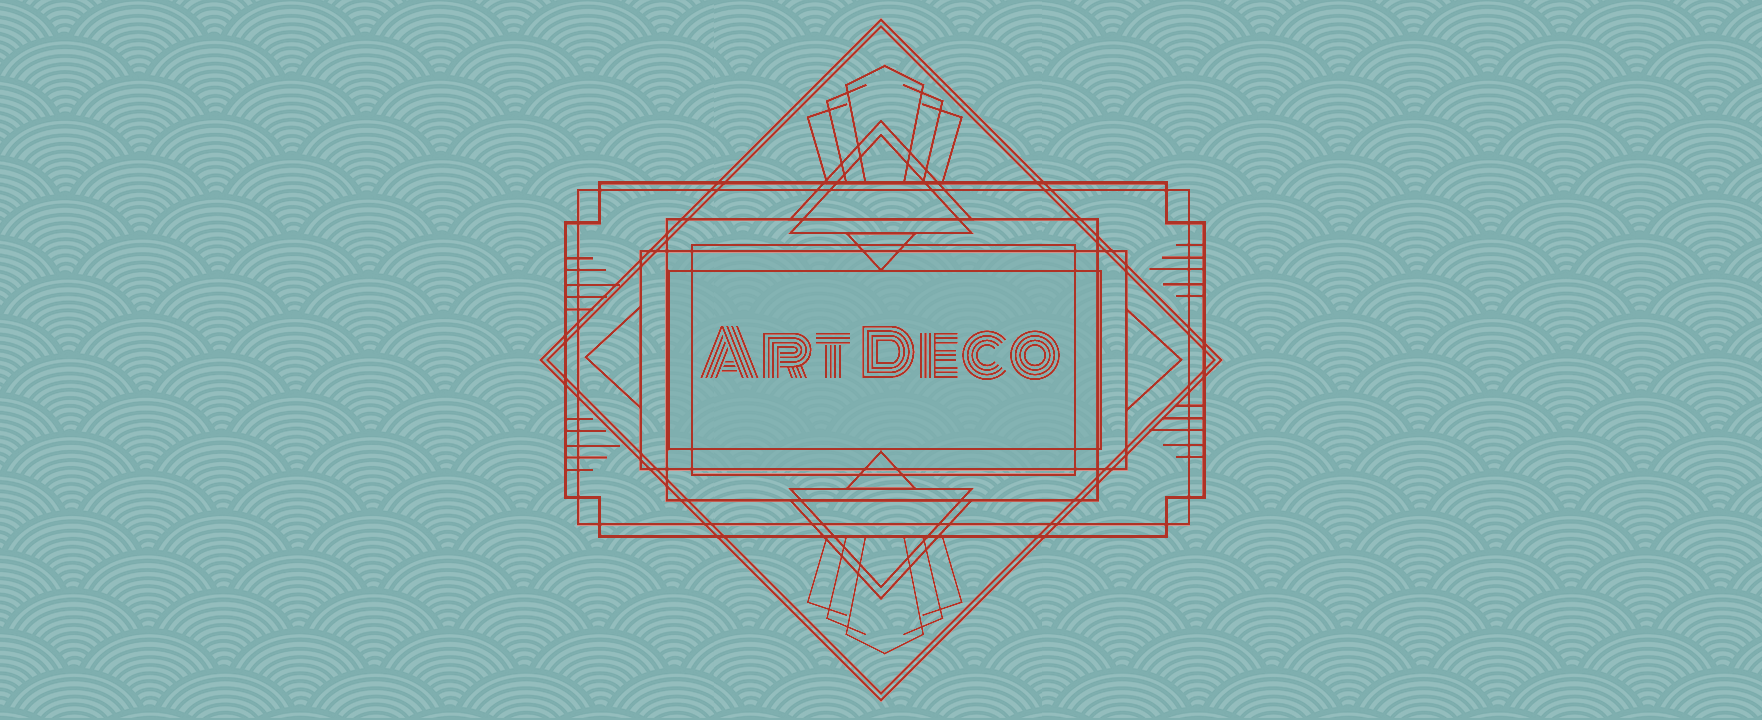 Art Deco Logo - Create An Art Deco Inspired Vector Logo In Gravit Designer